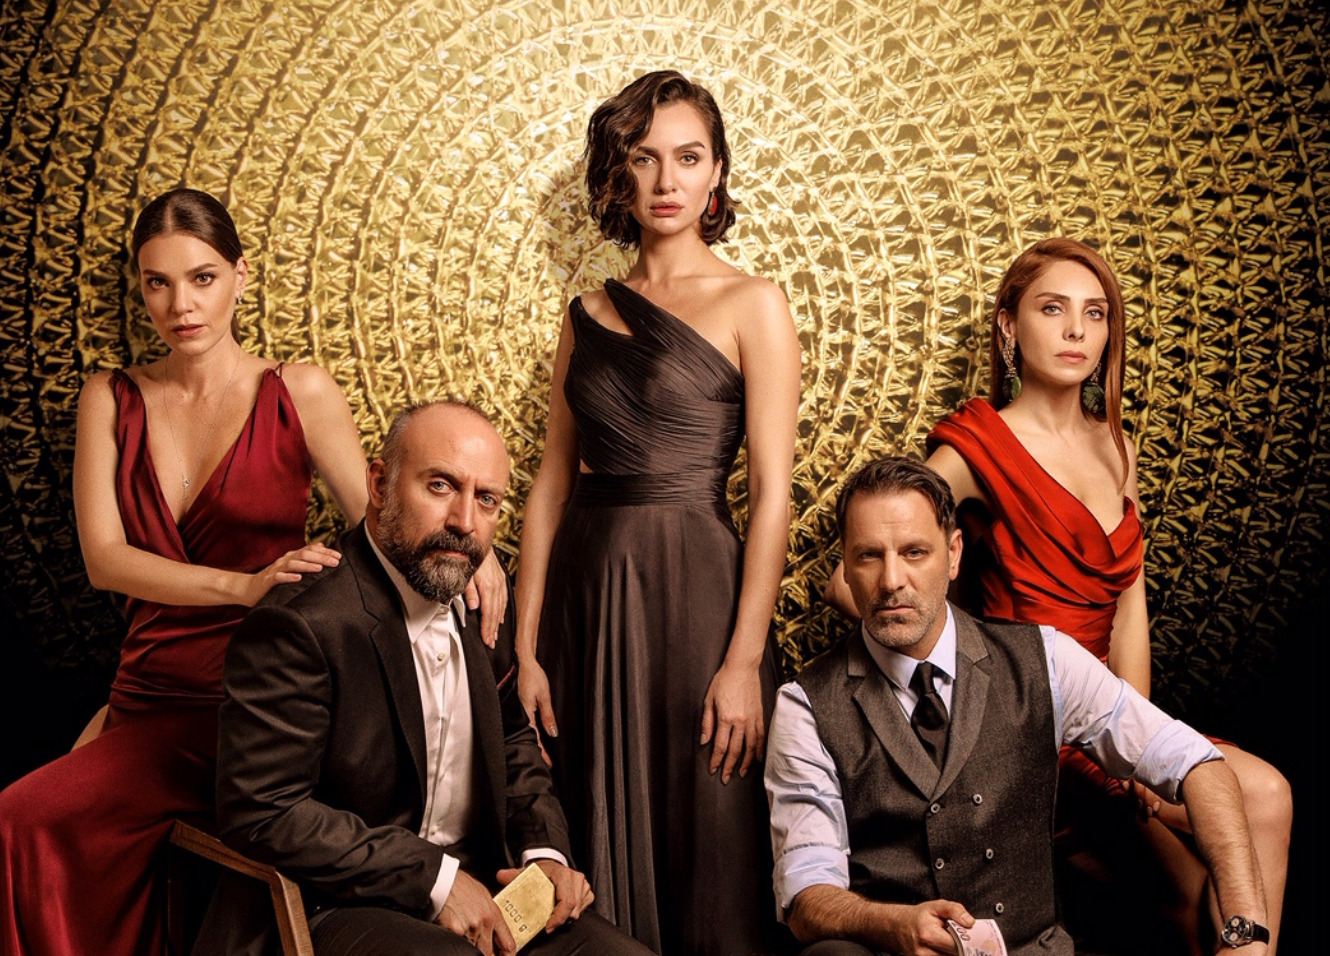 HBO Max estreia a novela turca The Choice no catálogo